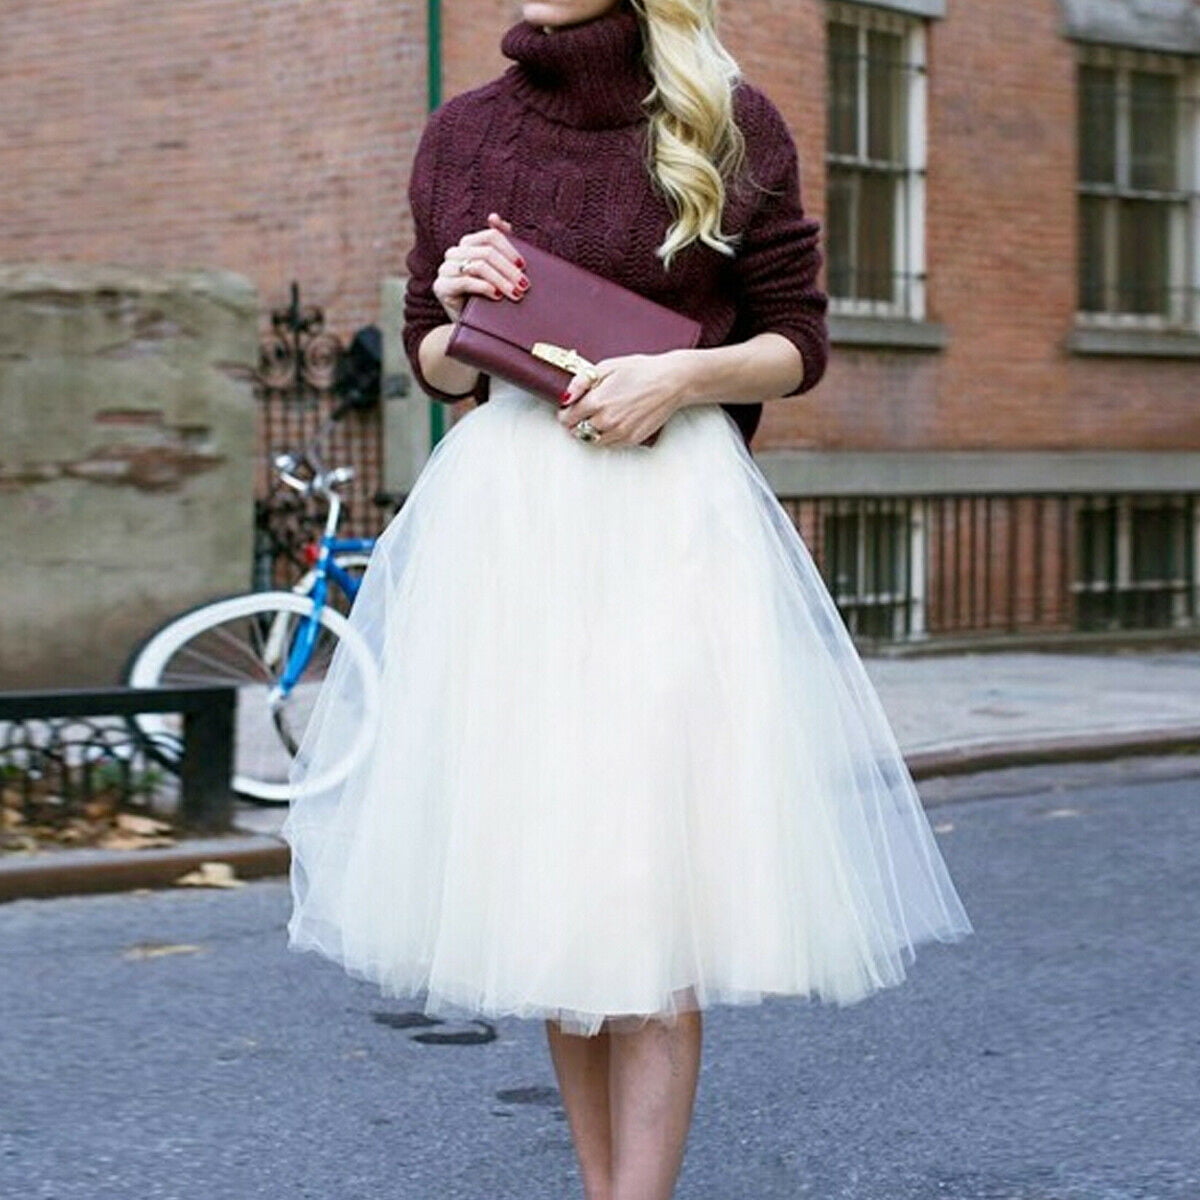 Quality Assured Brand New Elegant 5 layers tulle romantic tutus skirts 